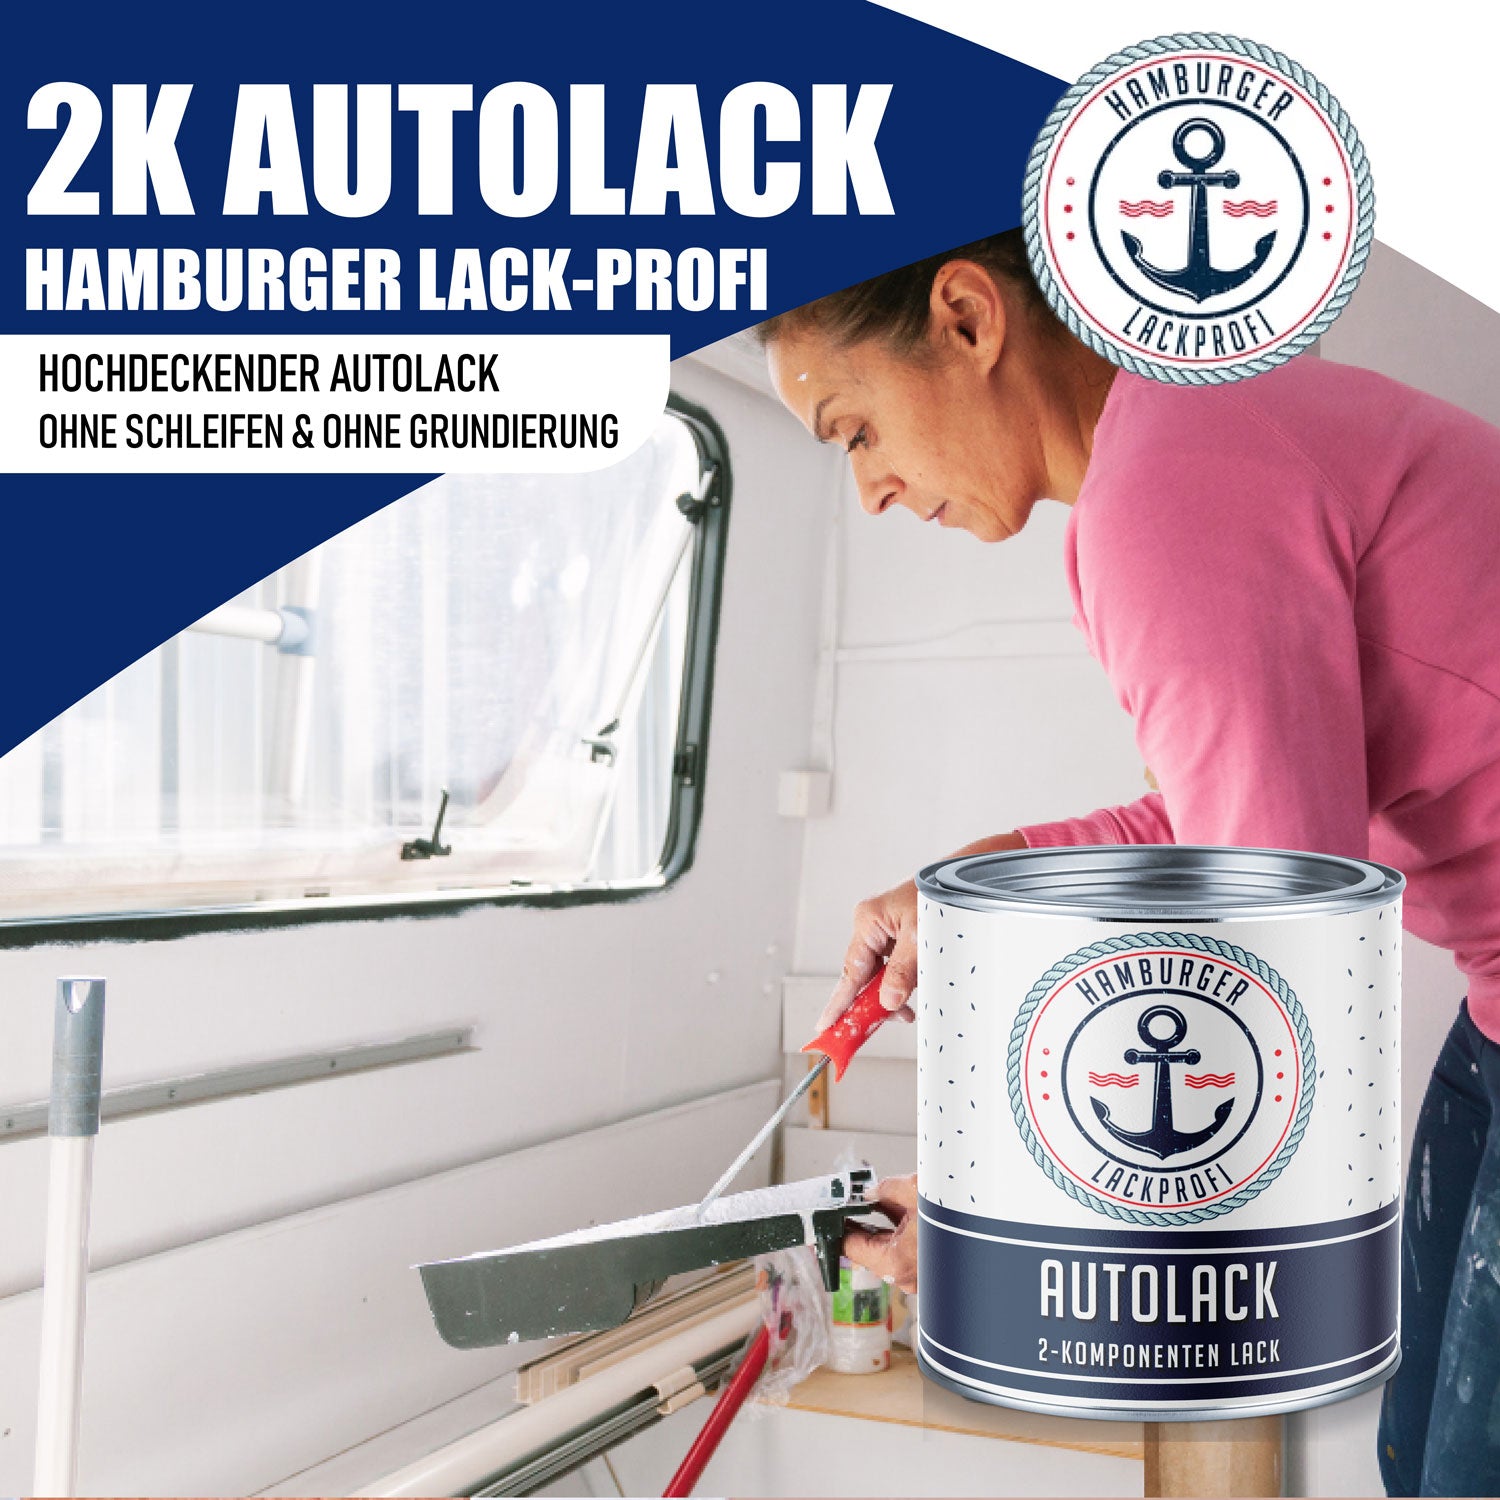 Hamburger Lack-Profi 2K Autolack in RAL 1001 Beige mit Lackierset (X300) & Verdünnung (1 L) - 30% Sparangebot - Hamburger Lack-Profi